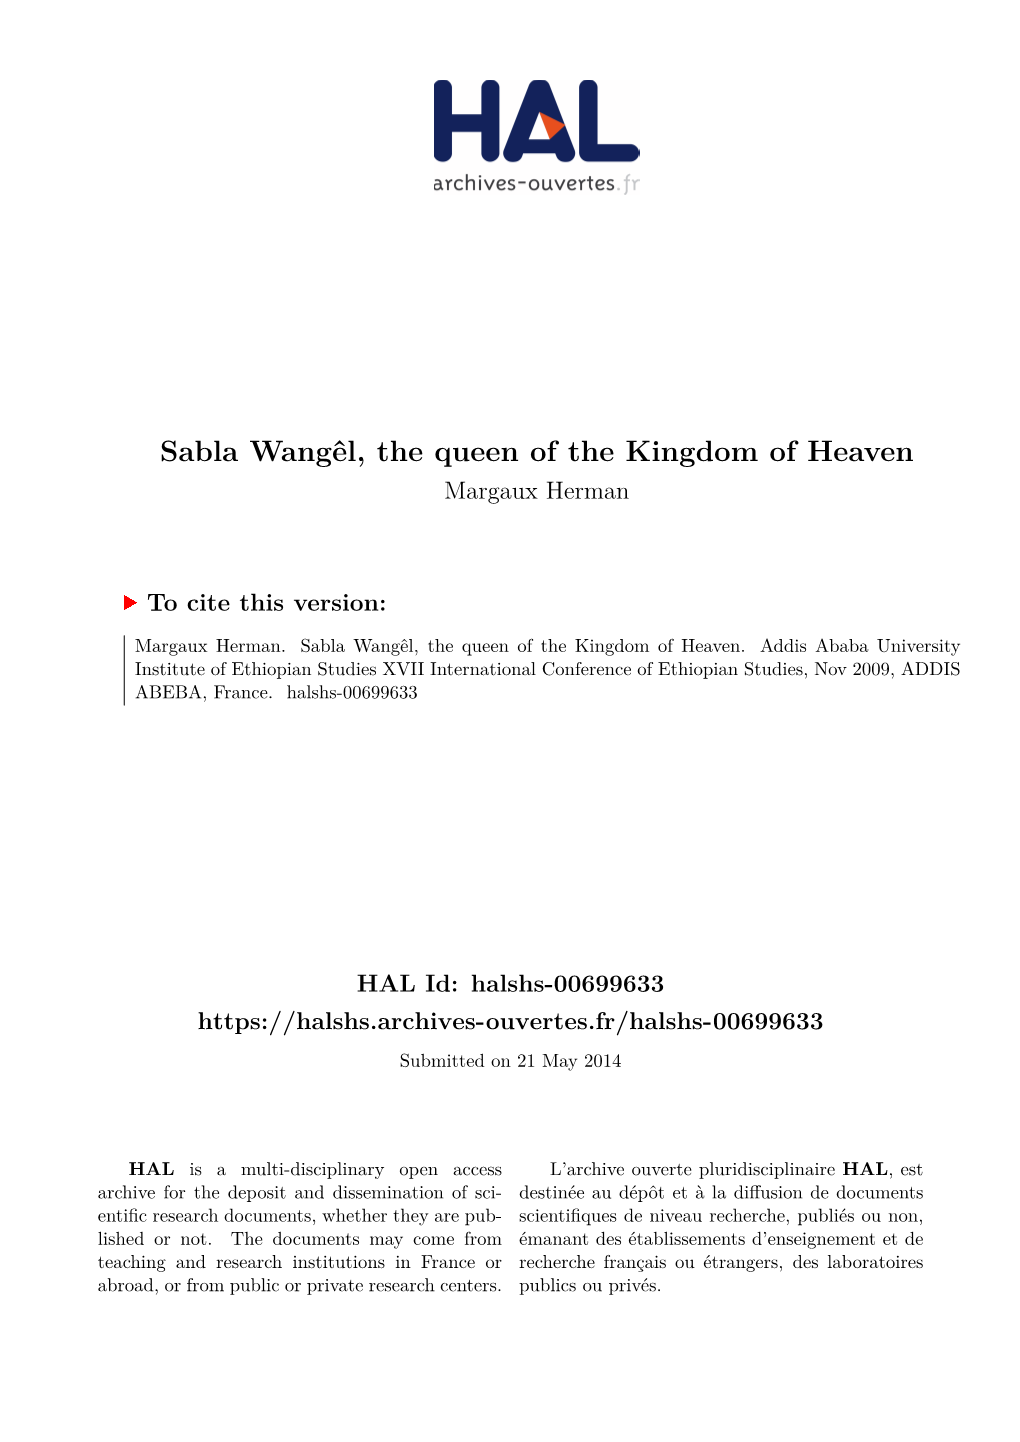 Sabla Wangêl, the Queen of the Kingdom of Heaven Margaux Herman